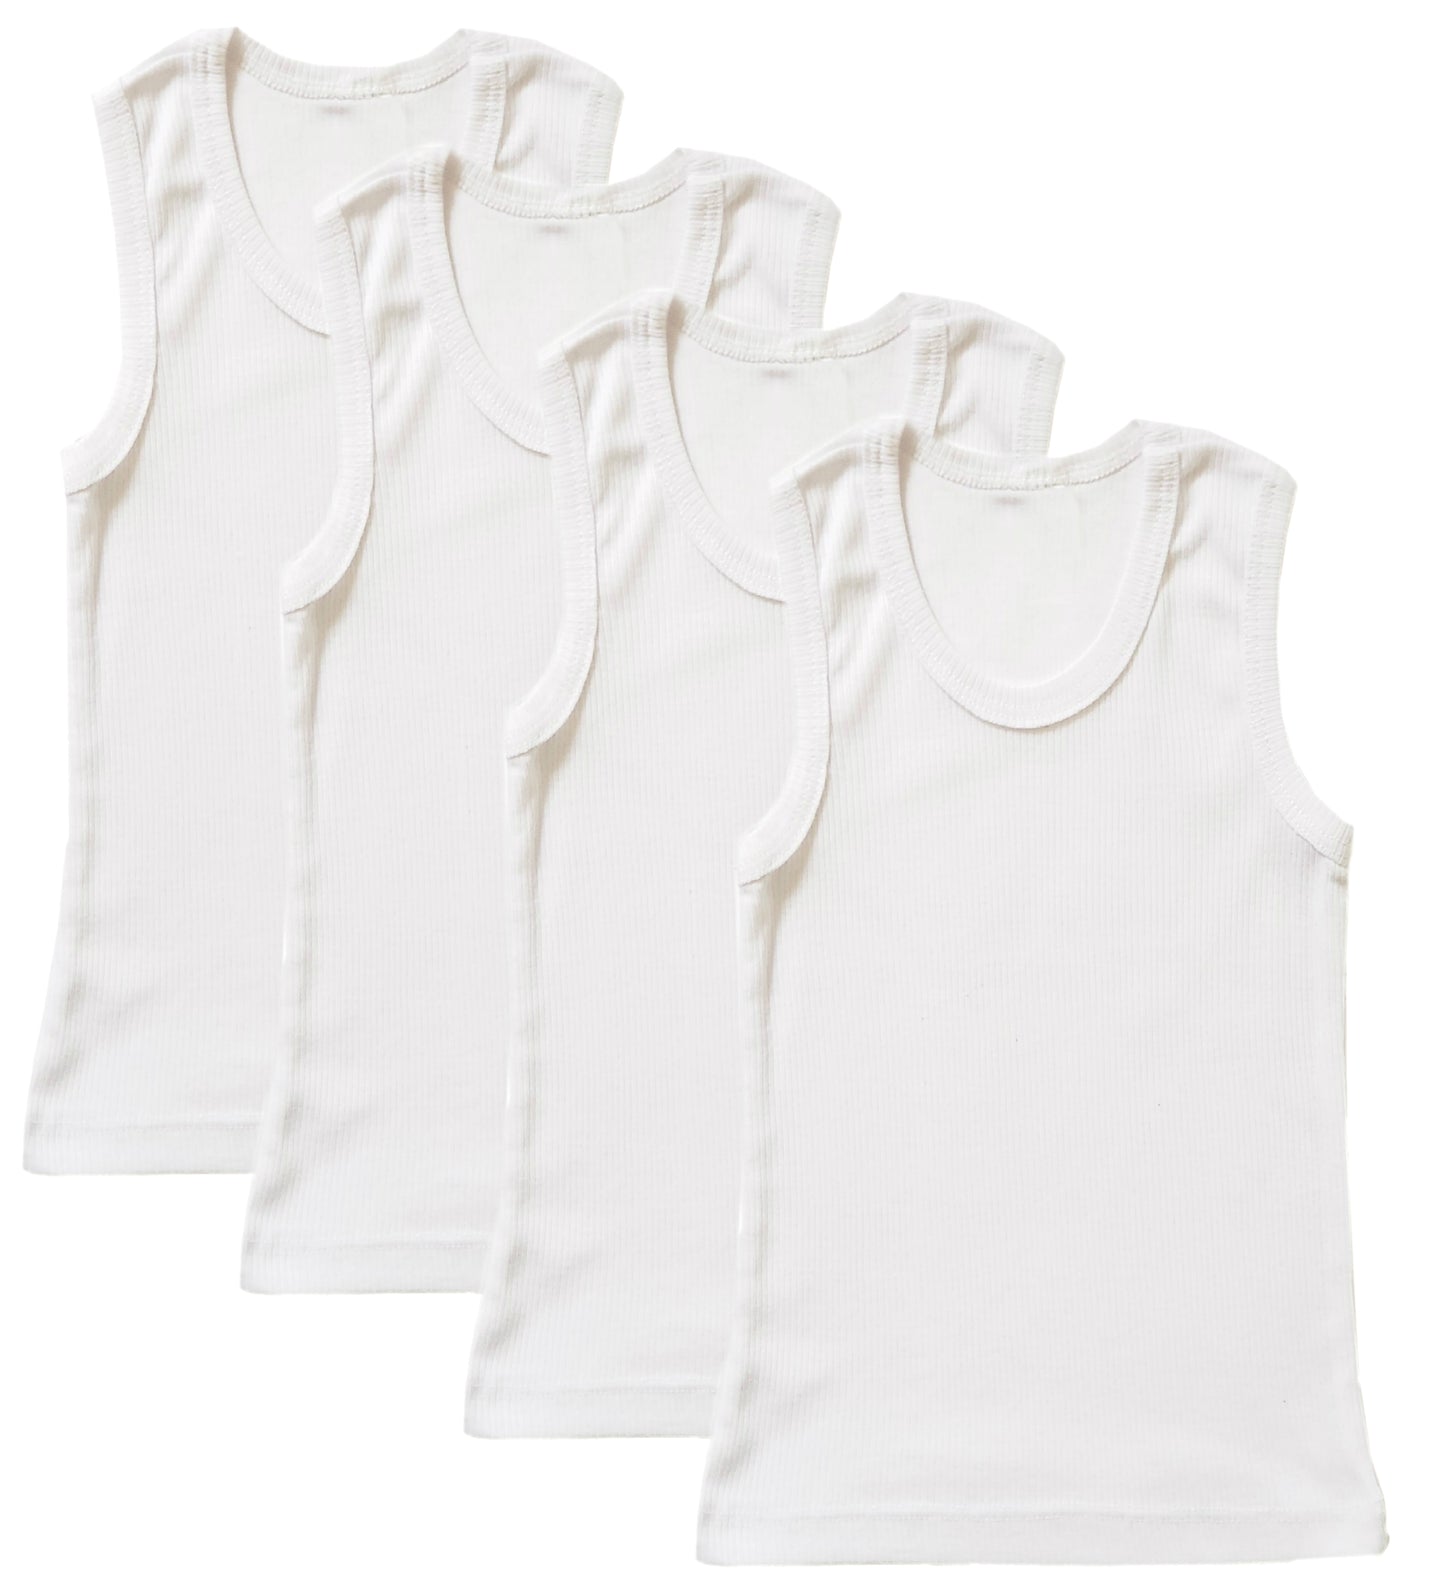 Boys Undershirt Cotton Tank Top Sleeveless 4 -Pack